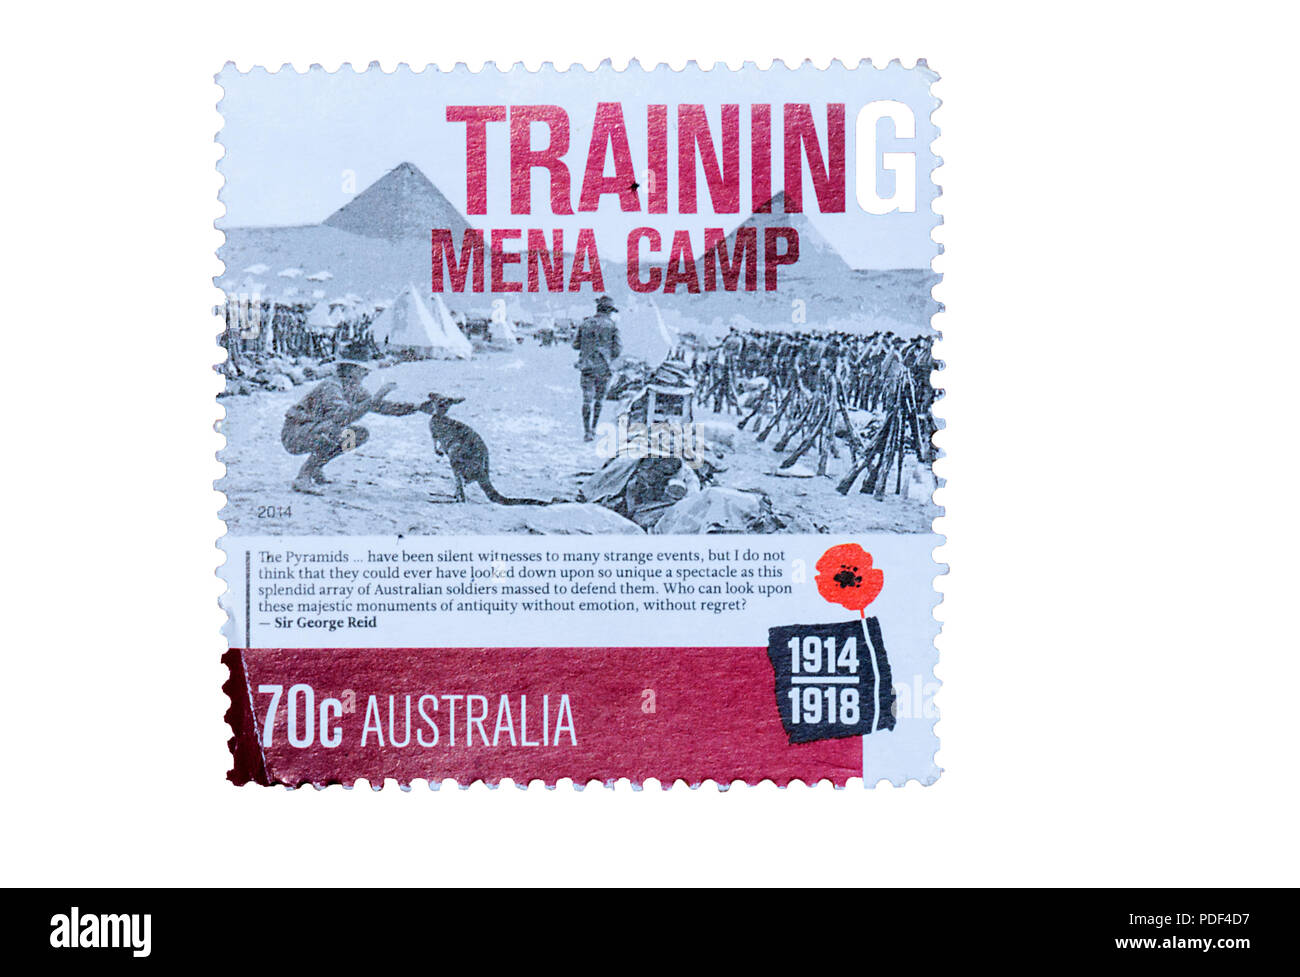 Ausbildung Mena Camp Australia Post Stempel, 70c, 2014 Stockfoto